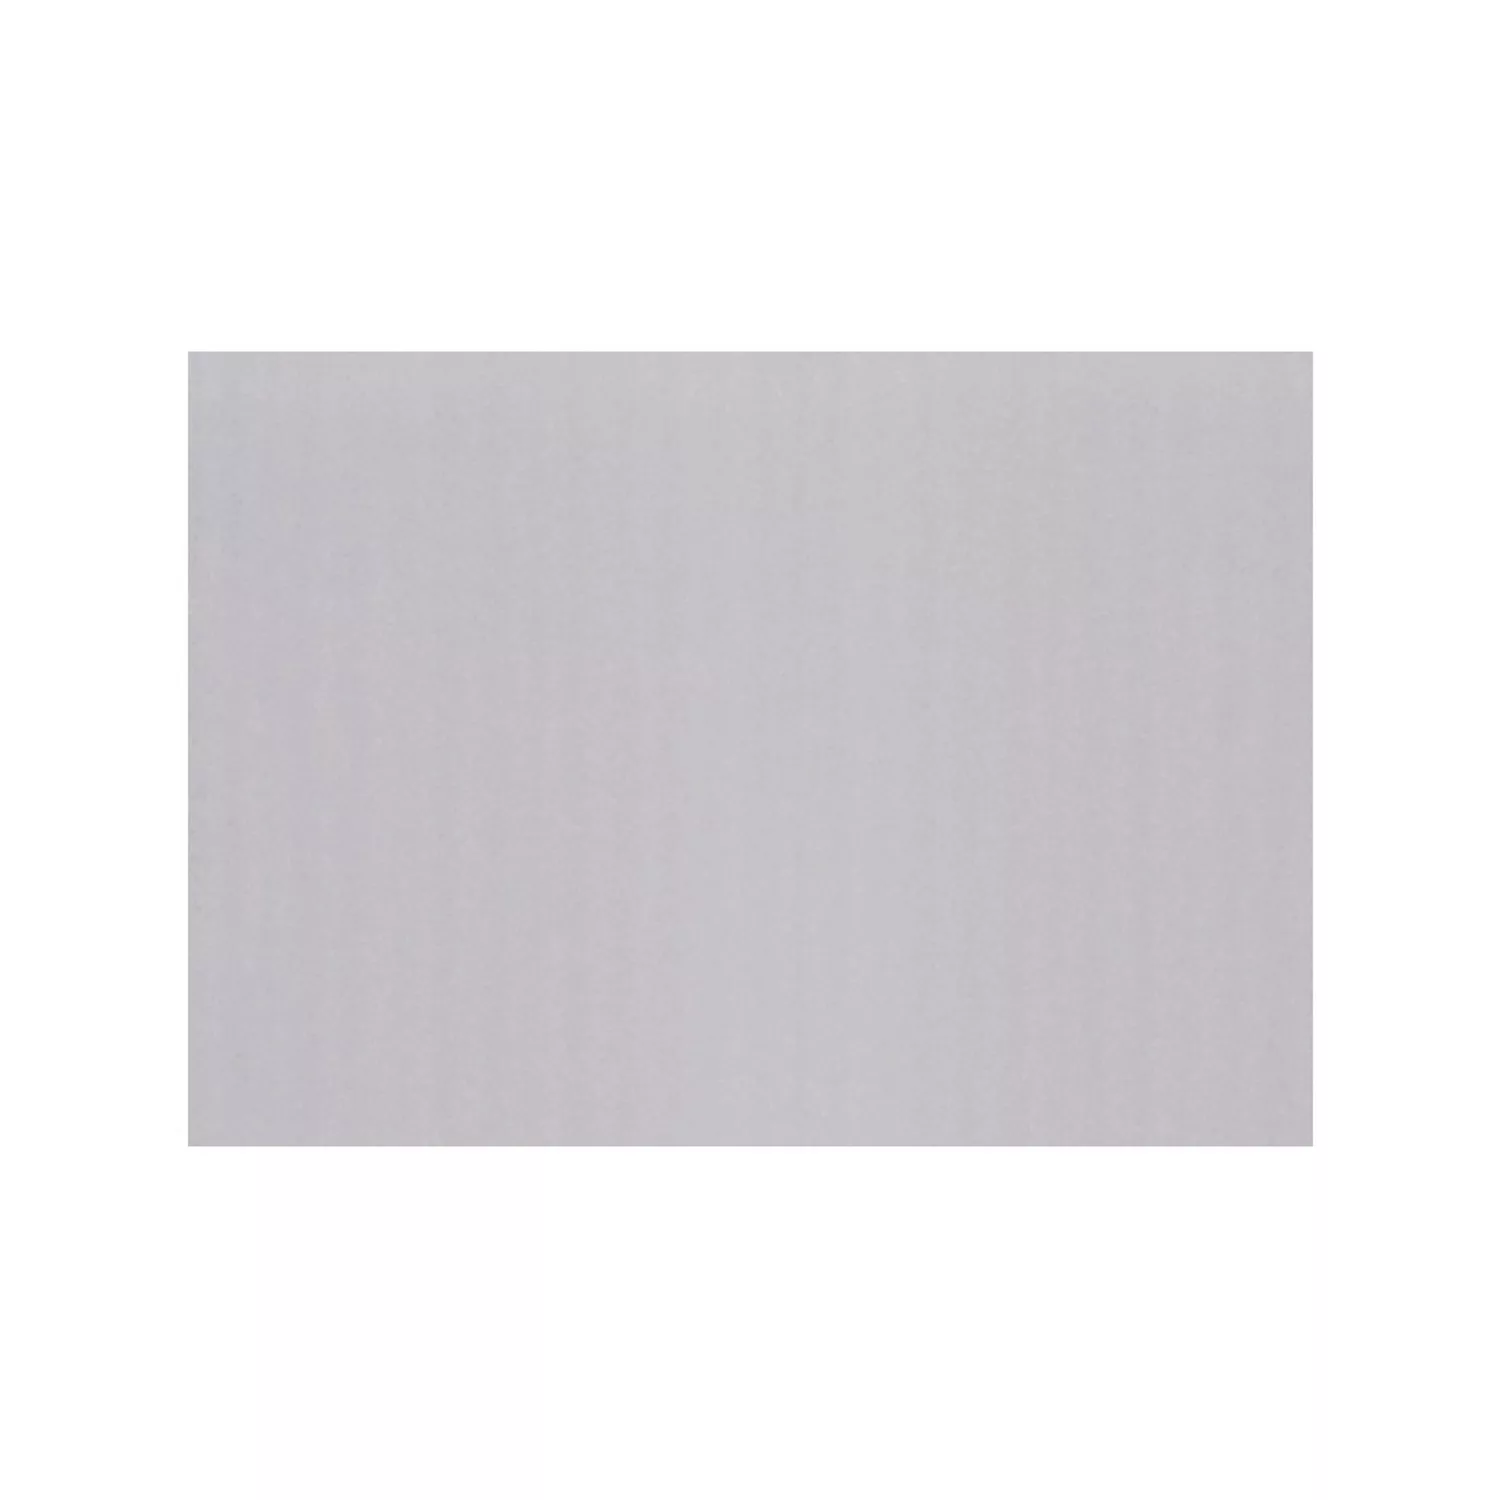 d-c-fix Klebefolie Silber matt 45 cm x 150 cm günstig online kaufen